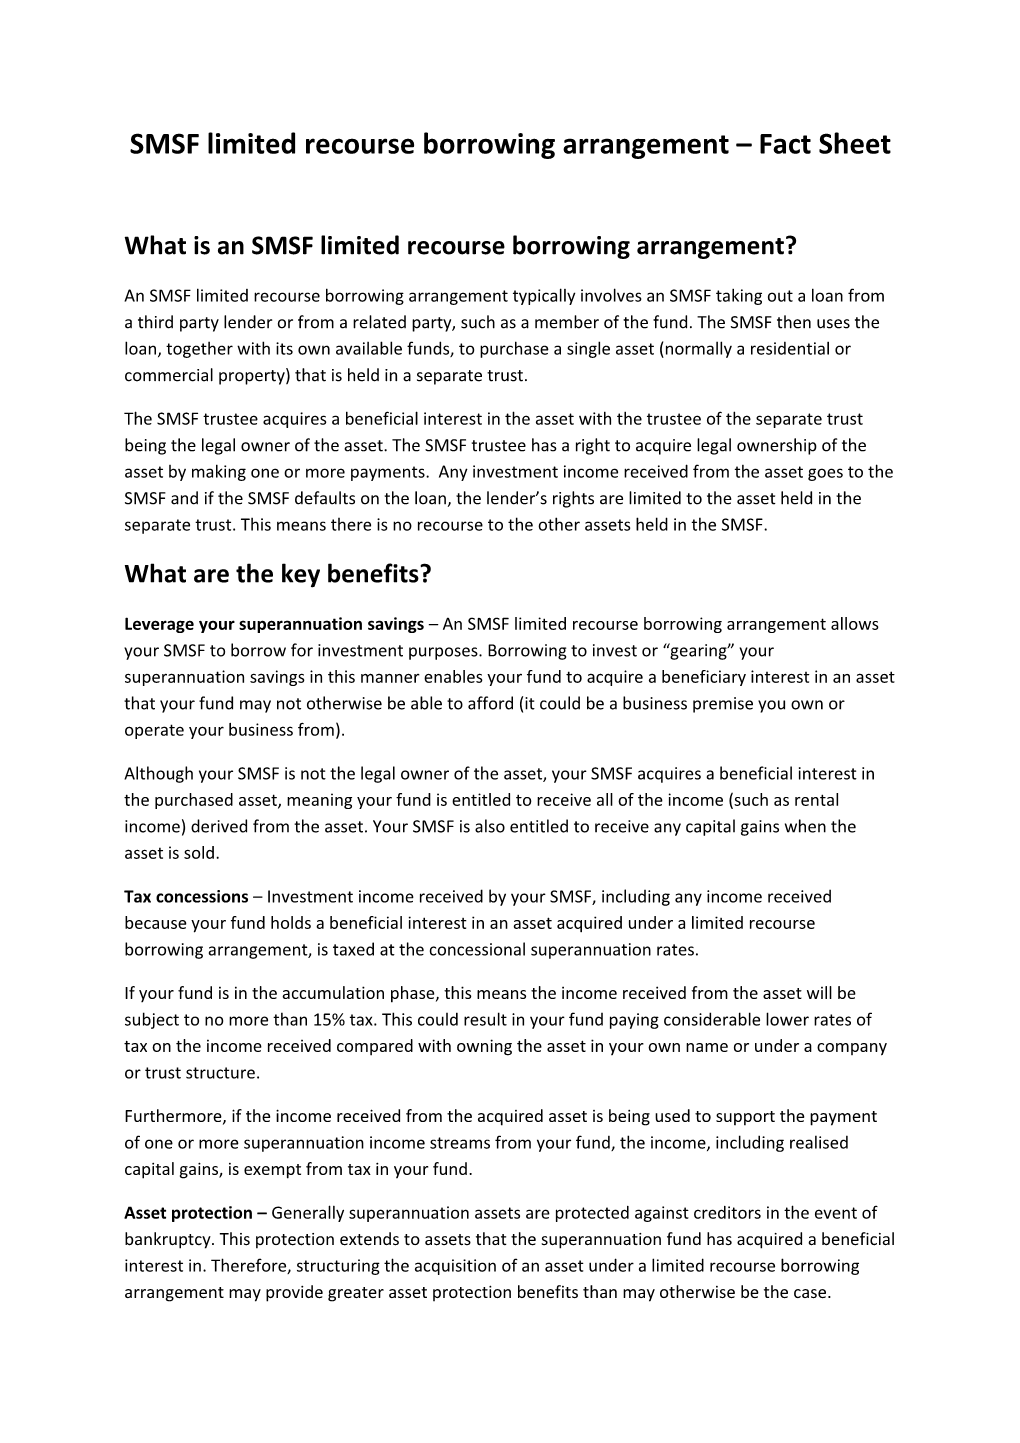 SMSF Limited Recourse Borrowing Arrangement Fact Sheet